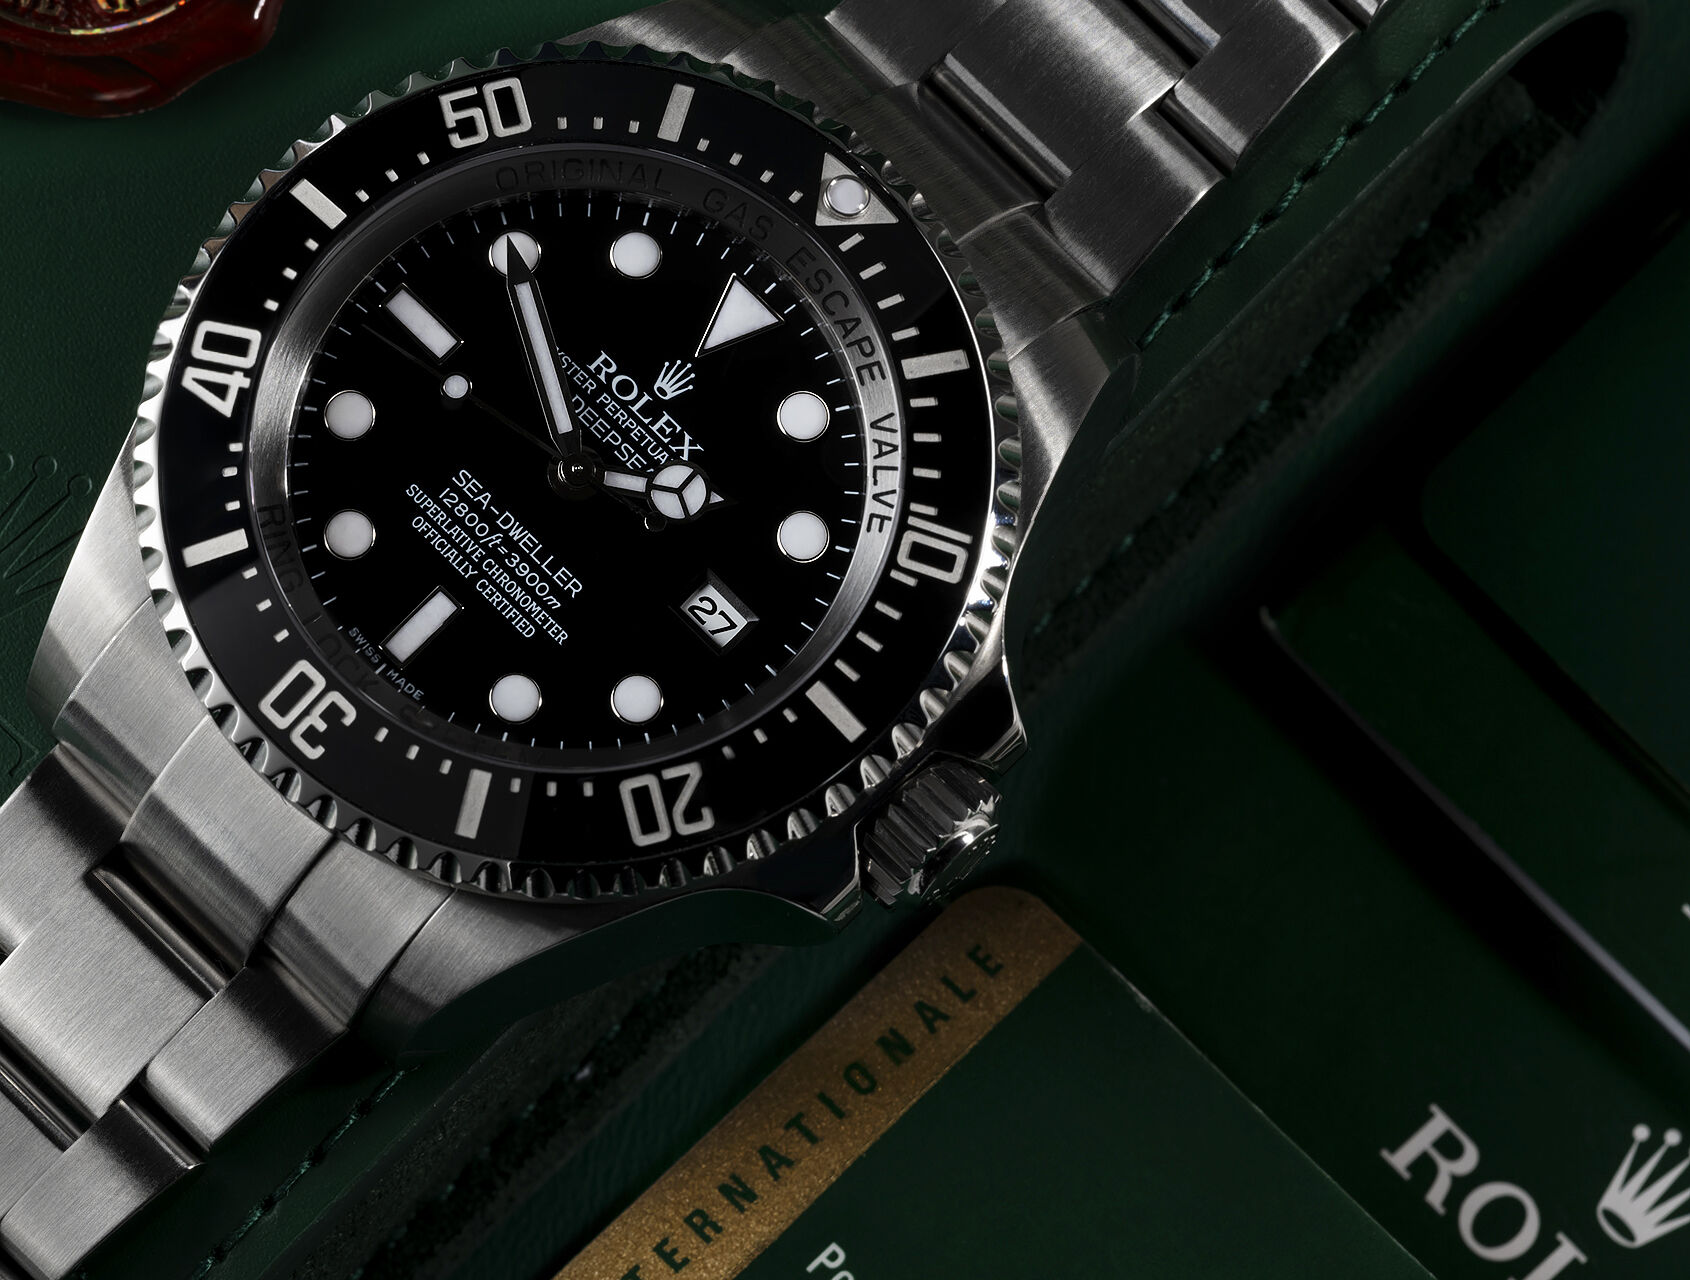 ref 116660 | 116660 - Just Serviced by Rolex | Rolex Sea-Dweller Deepsea